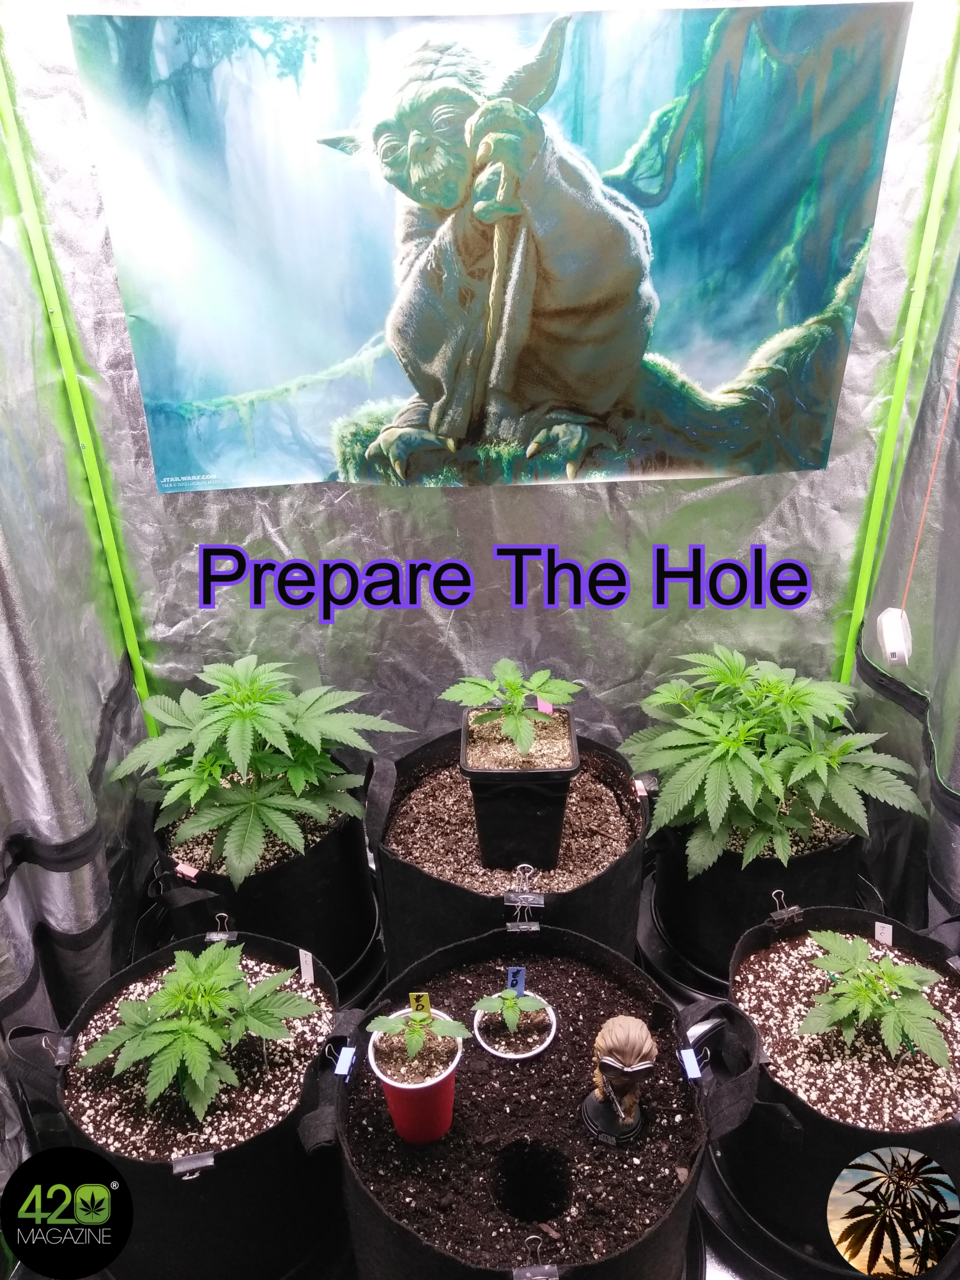 Step 2:  Prepare The Hole